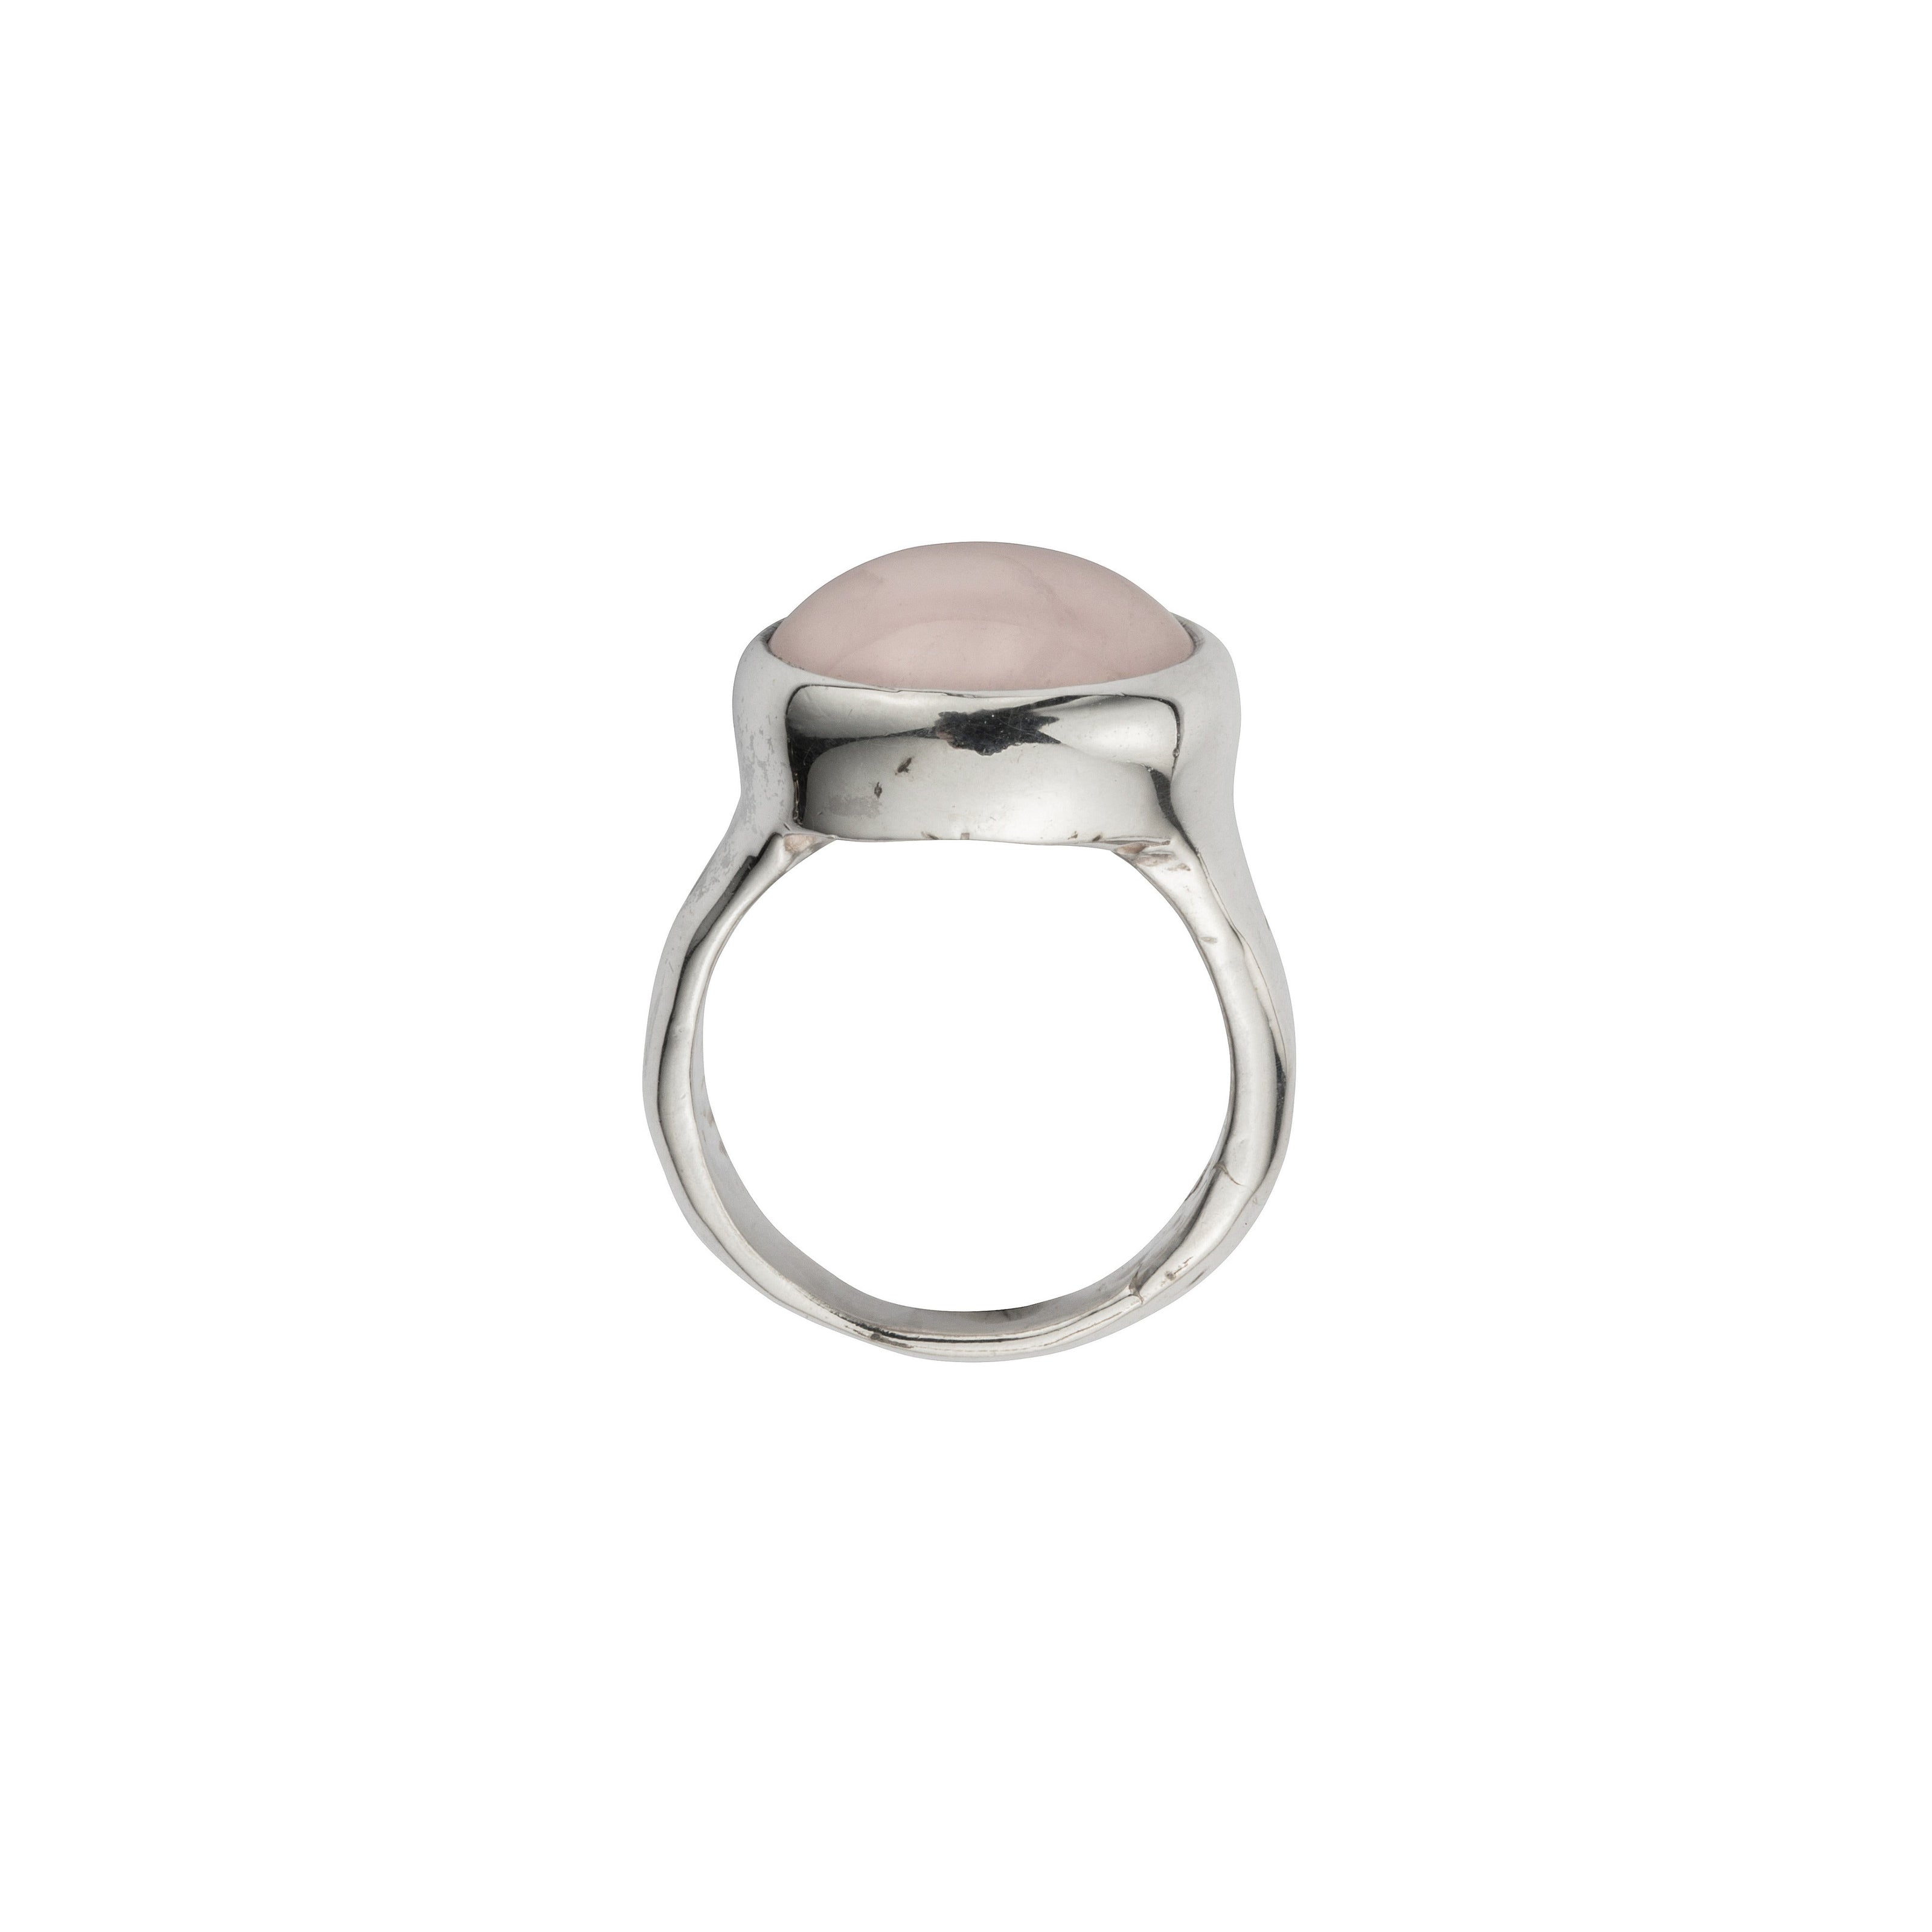 Silver Rose Quartz Mood Ring